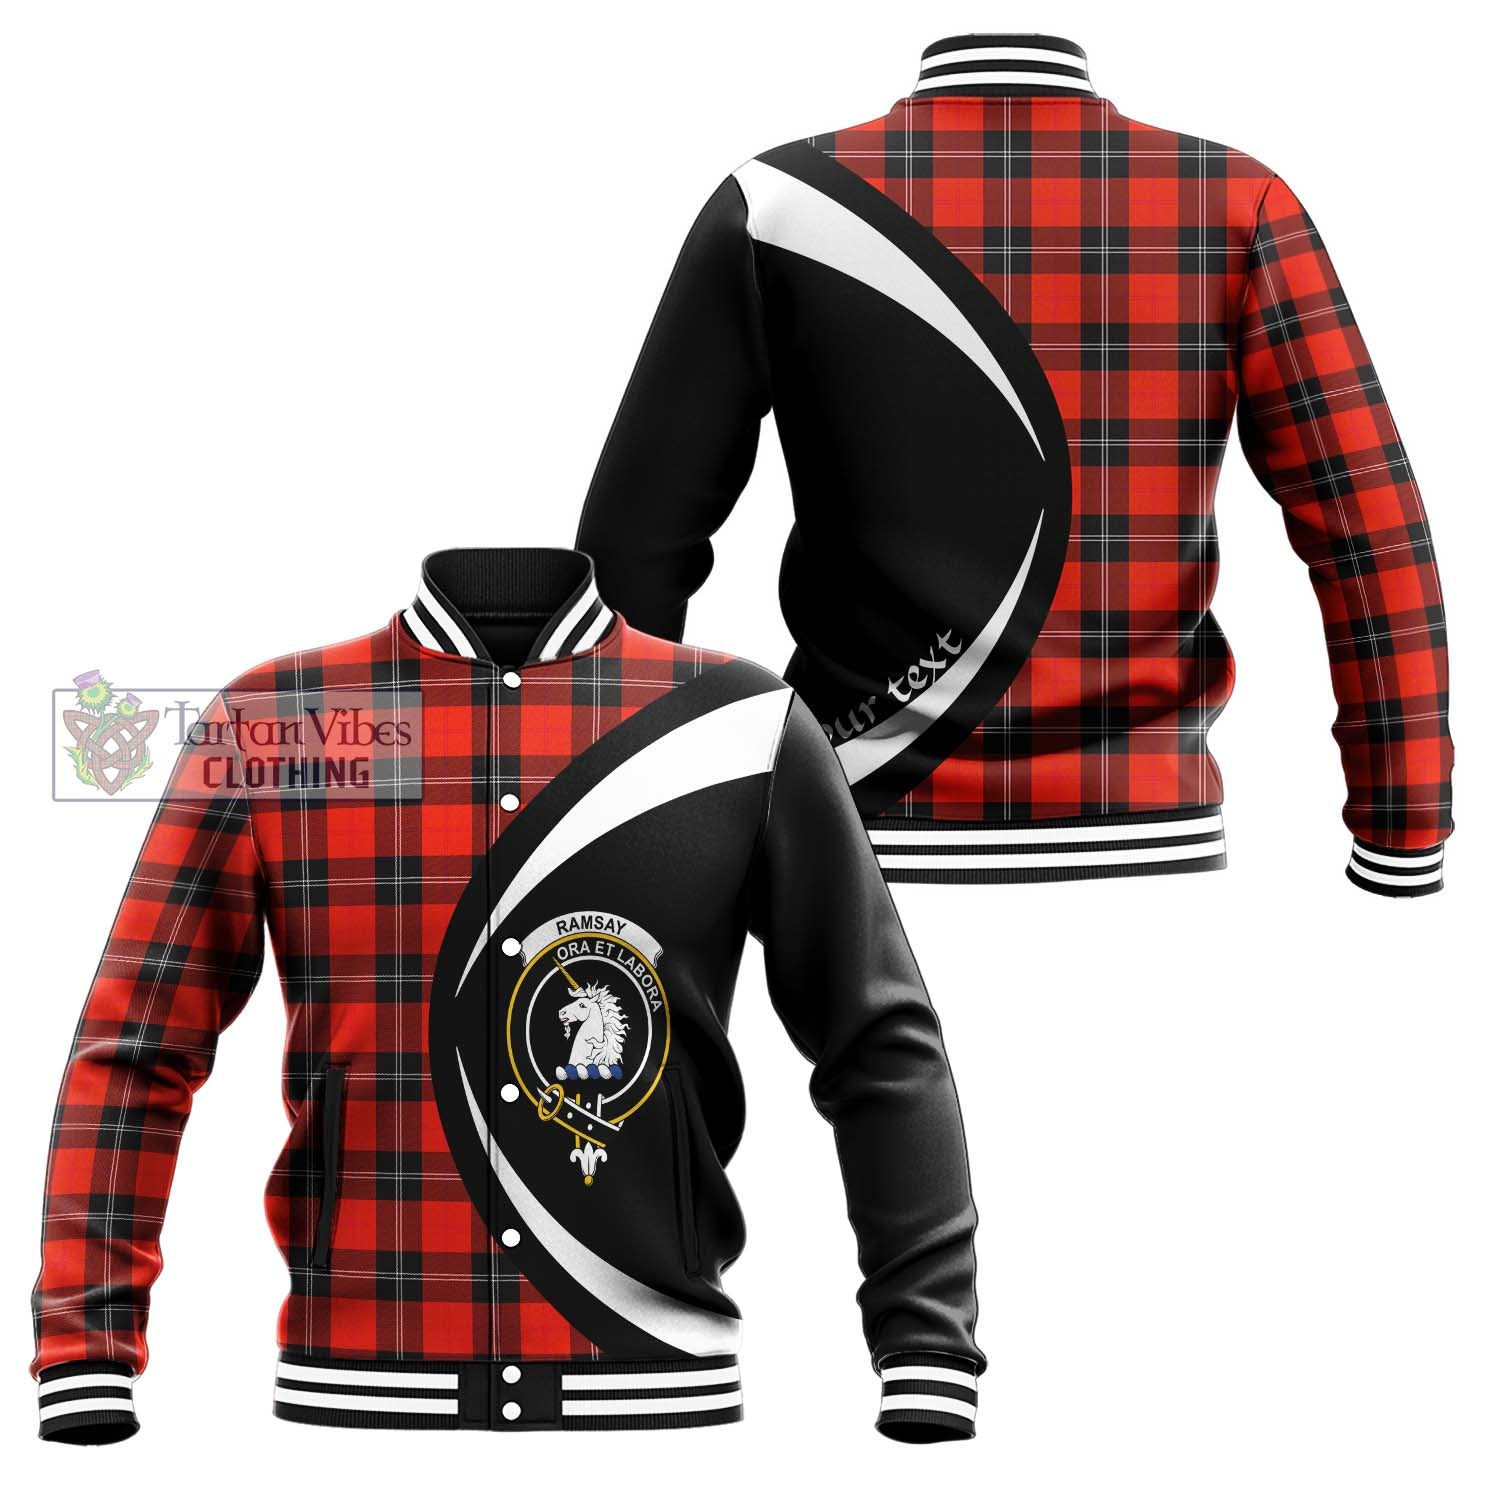 Tartan Vibes Clothing Ramsay Modern Tartan Baseball Jacket with Family Crest Circle Style